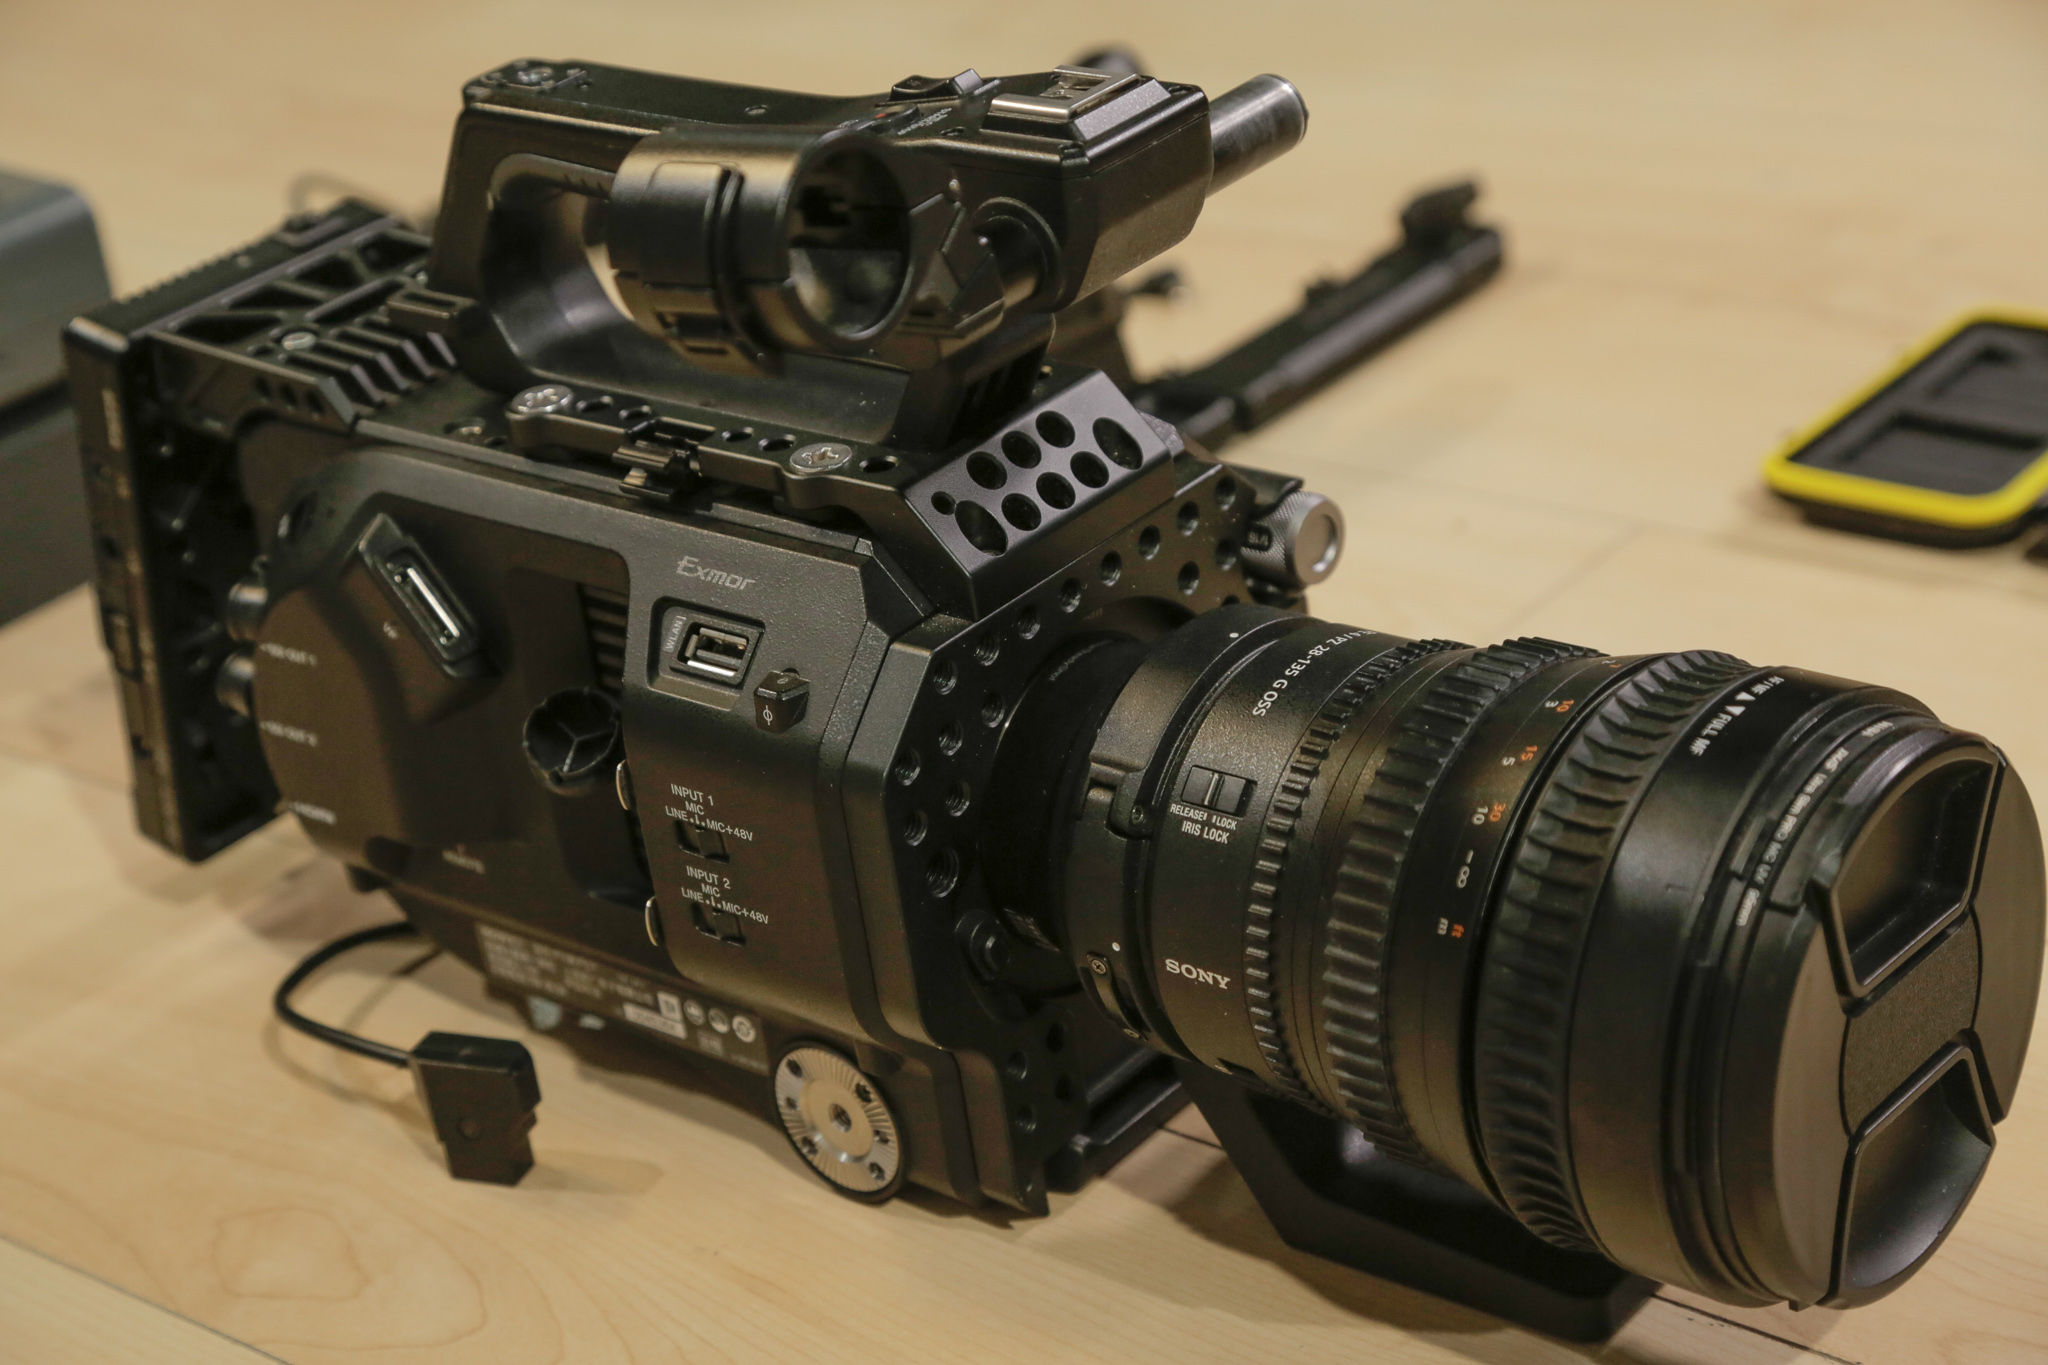 fs7摄像机